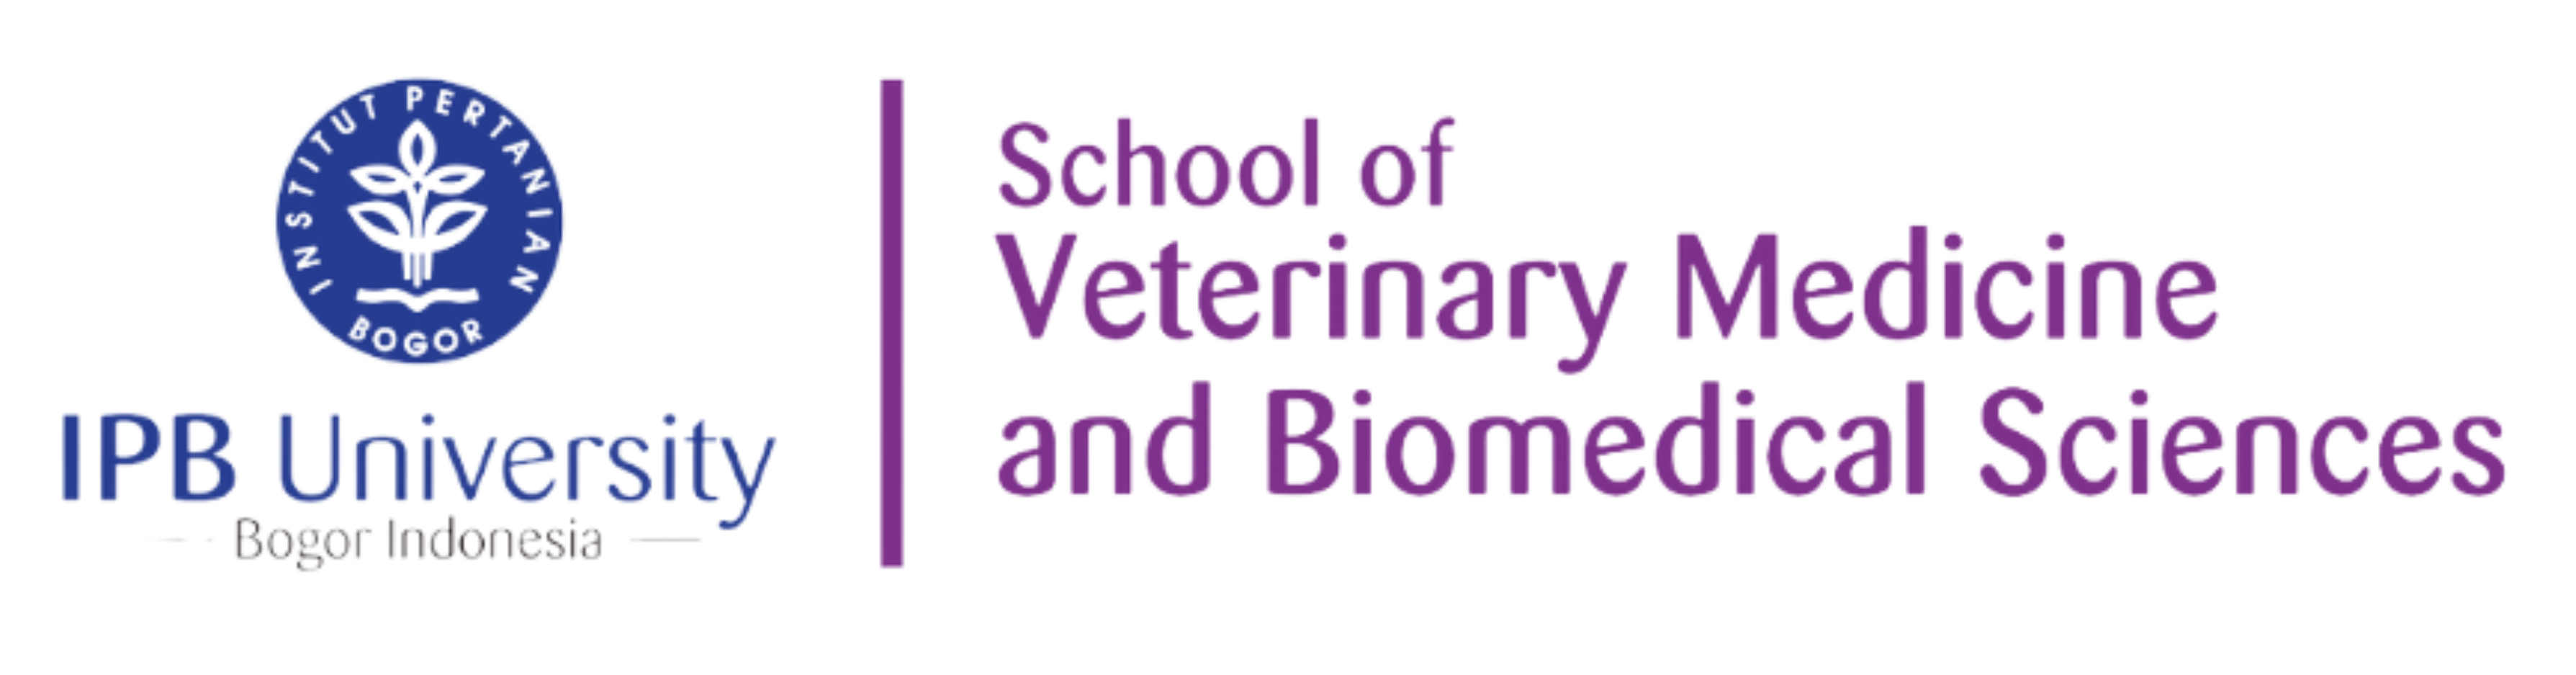 School of Veterinary Medicine and Biomedical Sciences IPB University